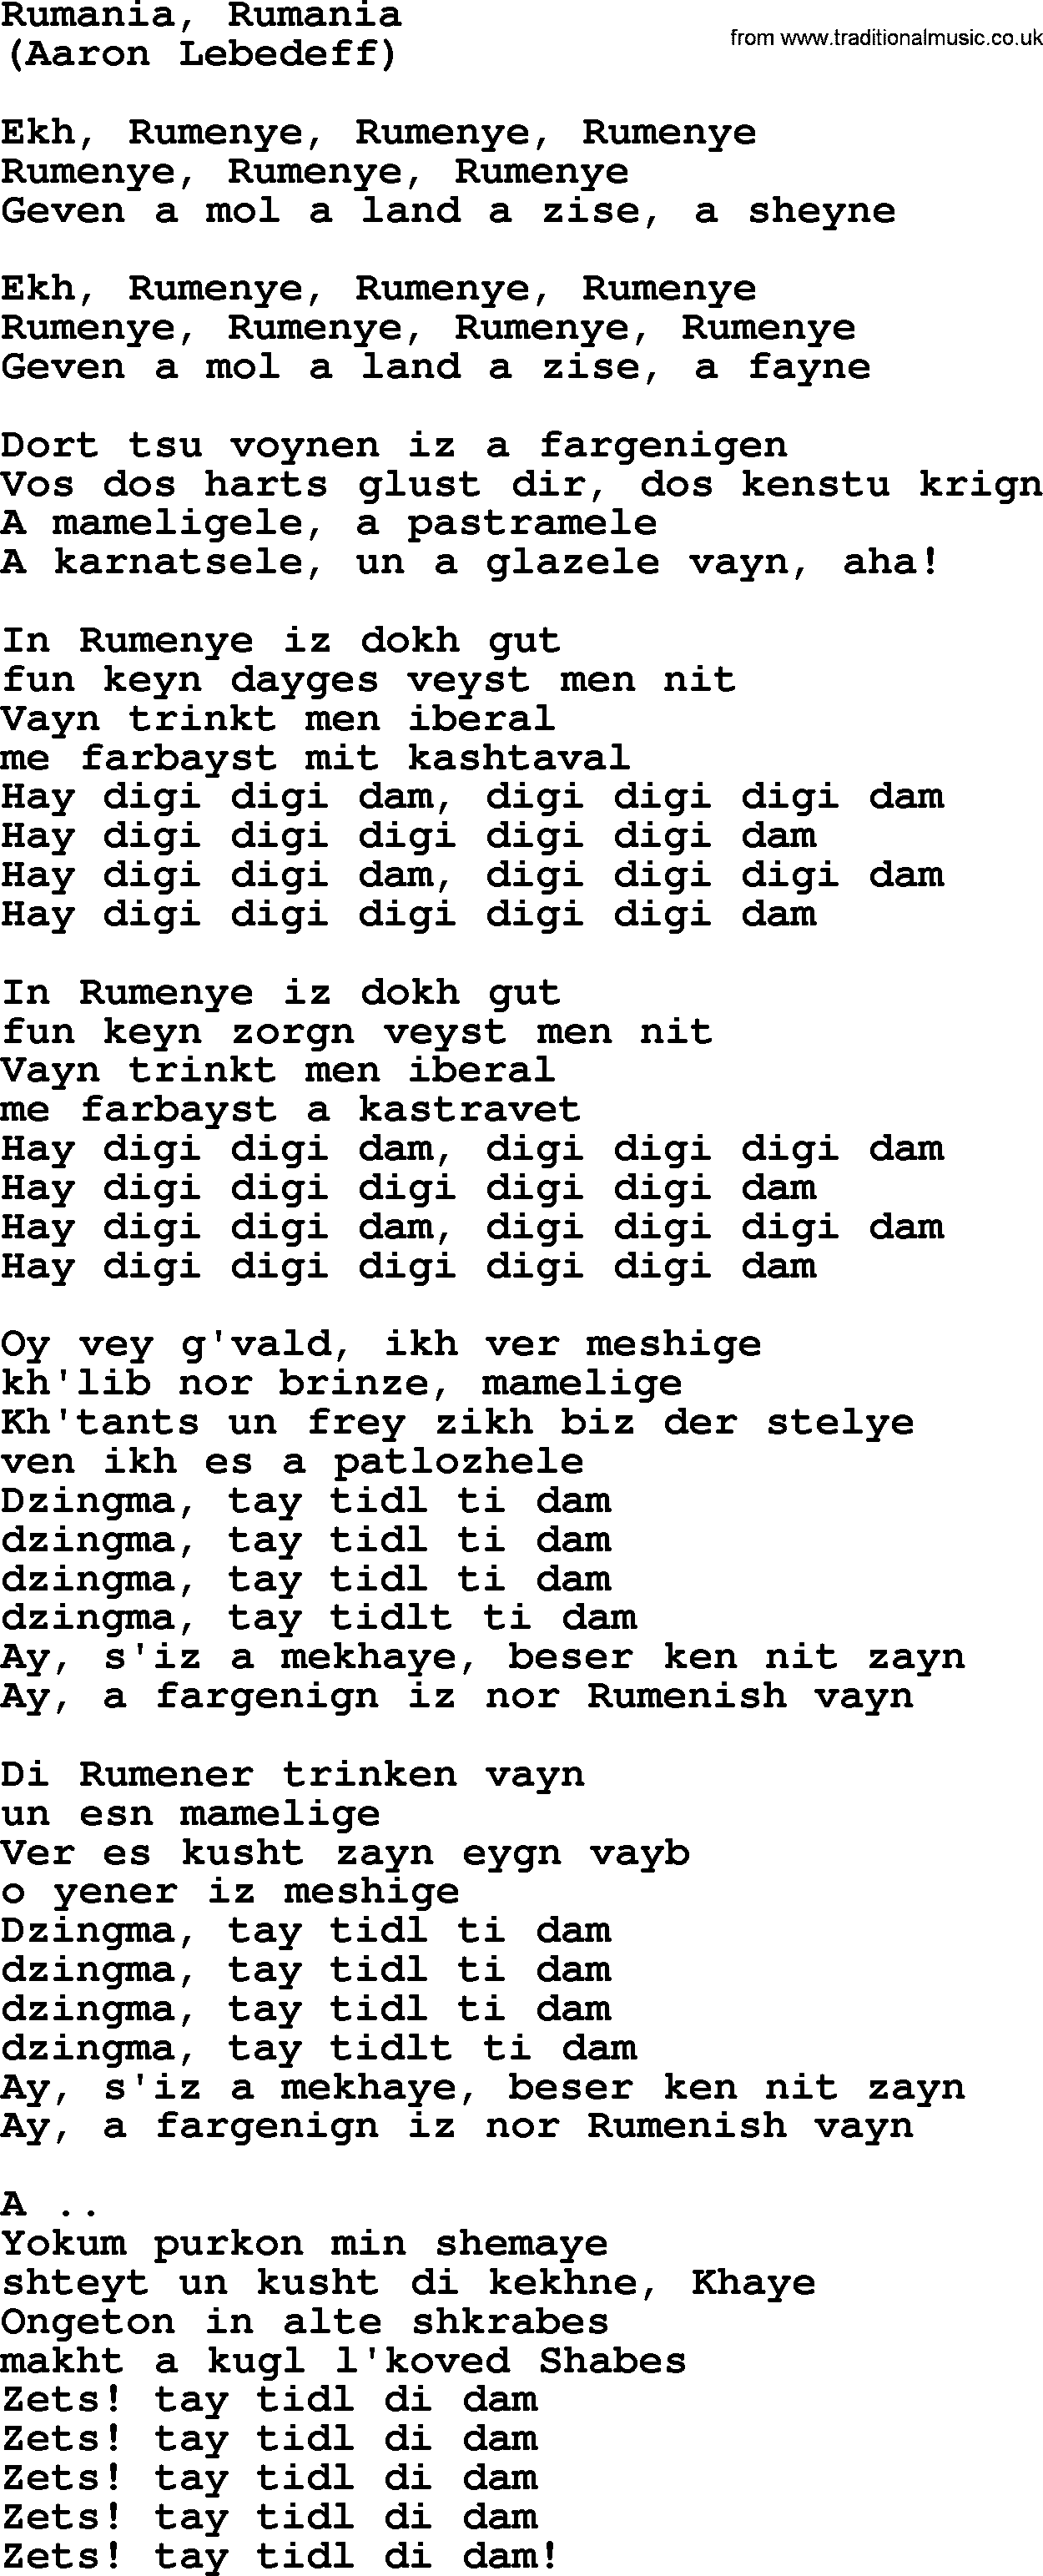 The Byrds song Rumania, Rumania, lyrics